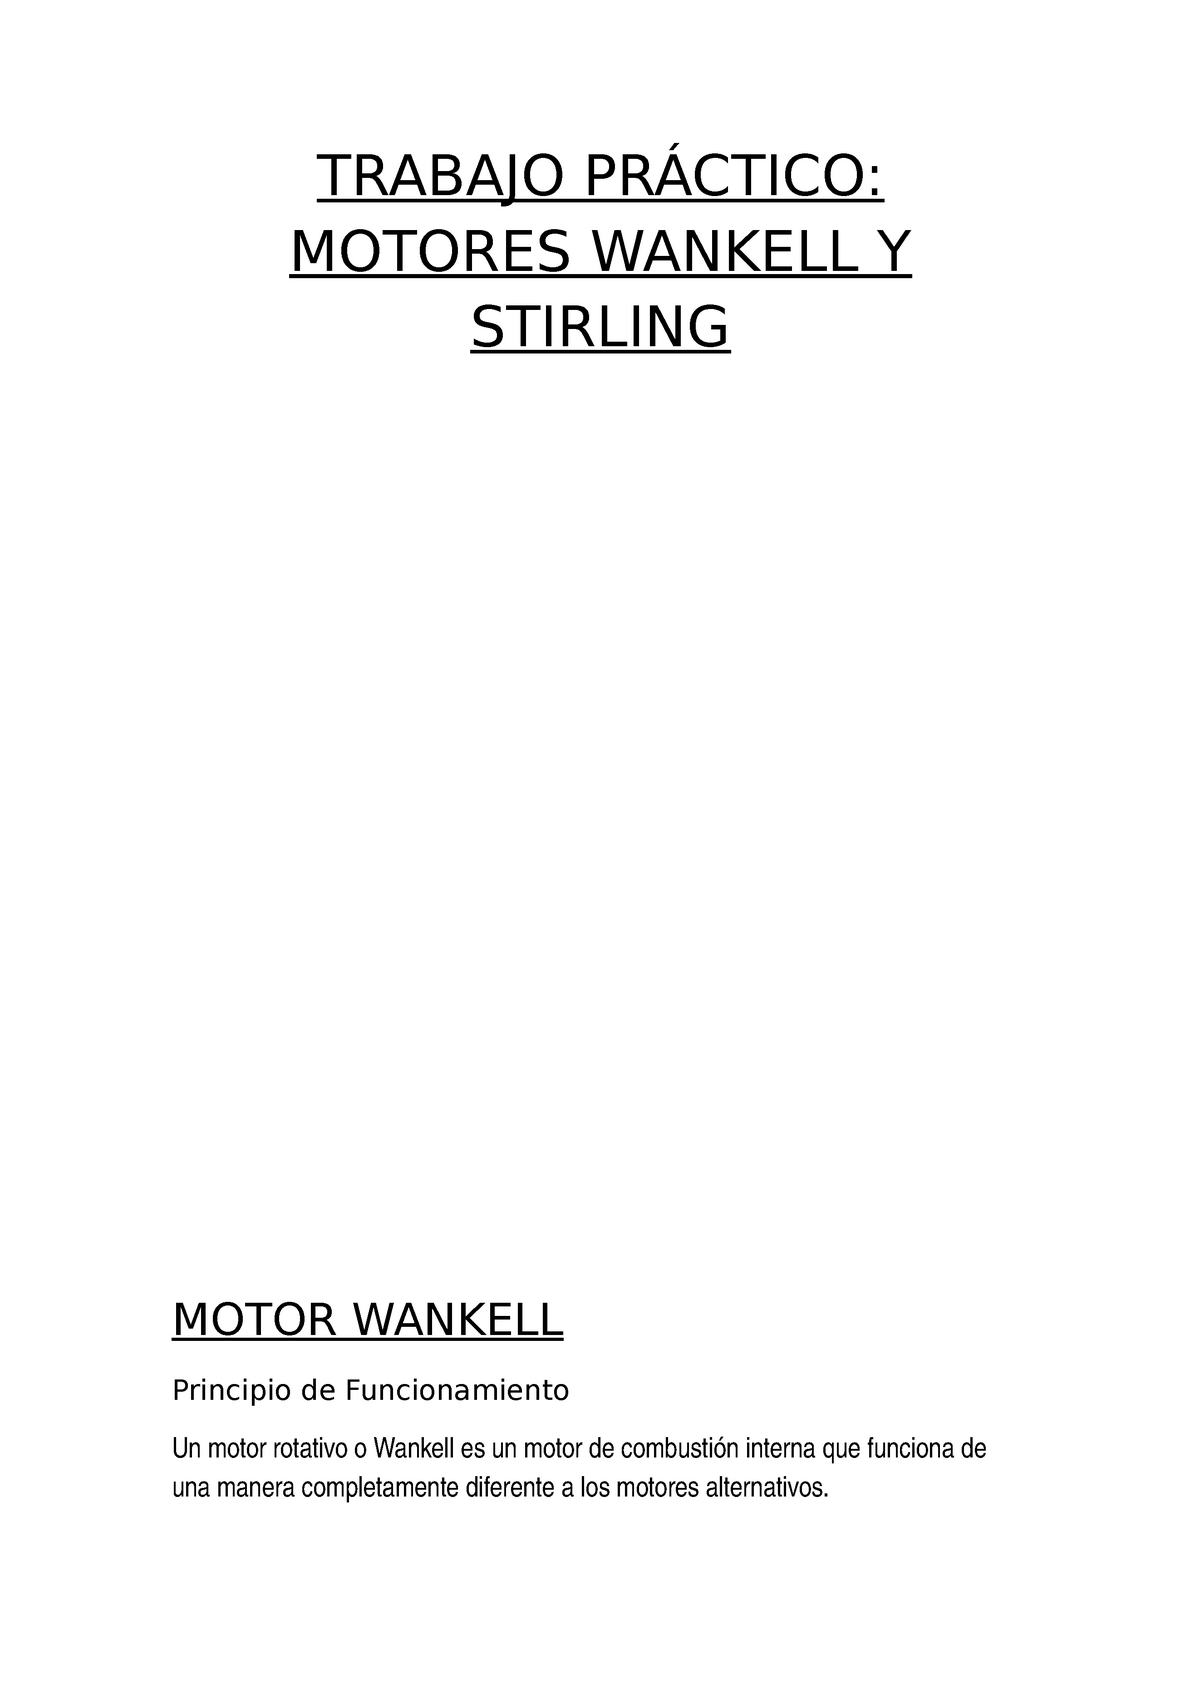 Motores Wankel Stirling Studocu